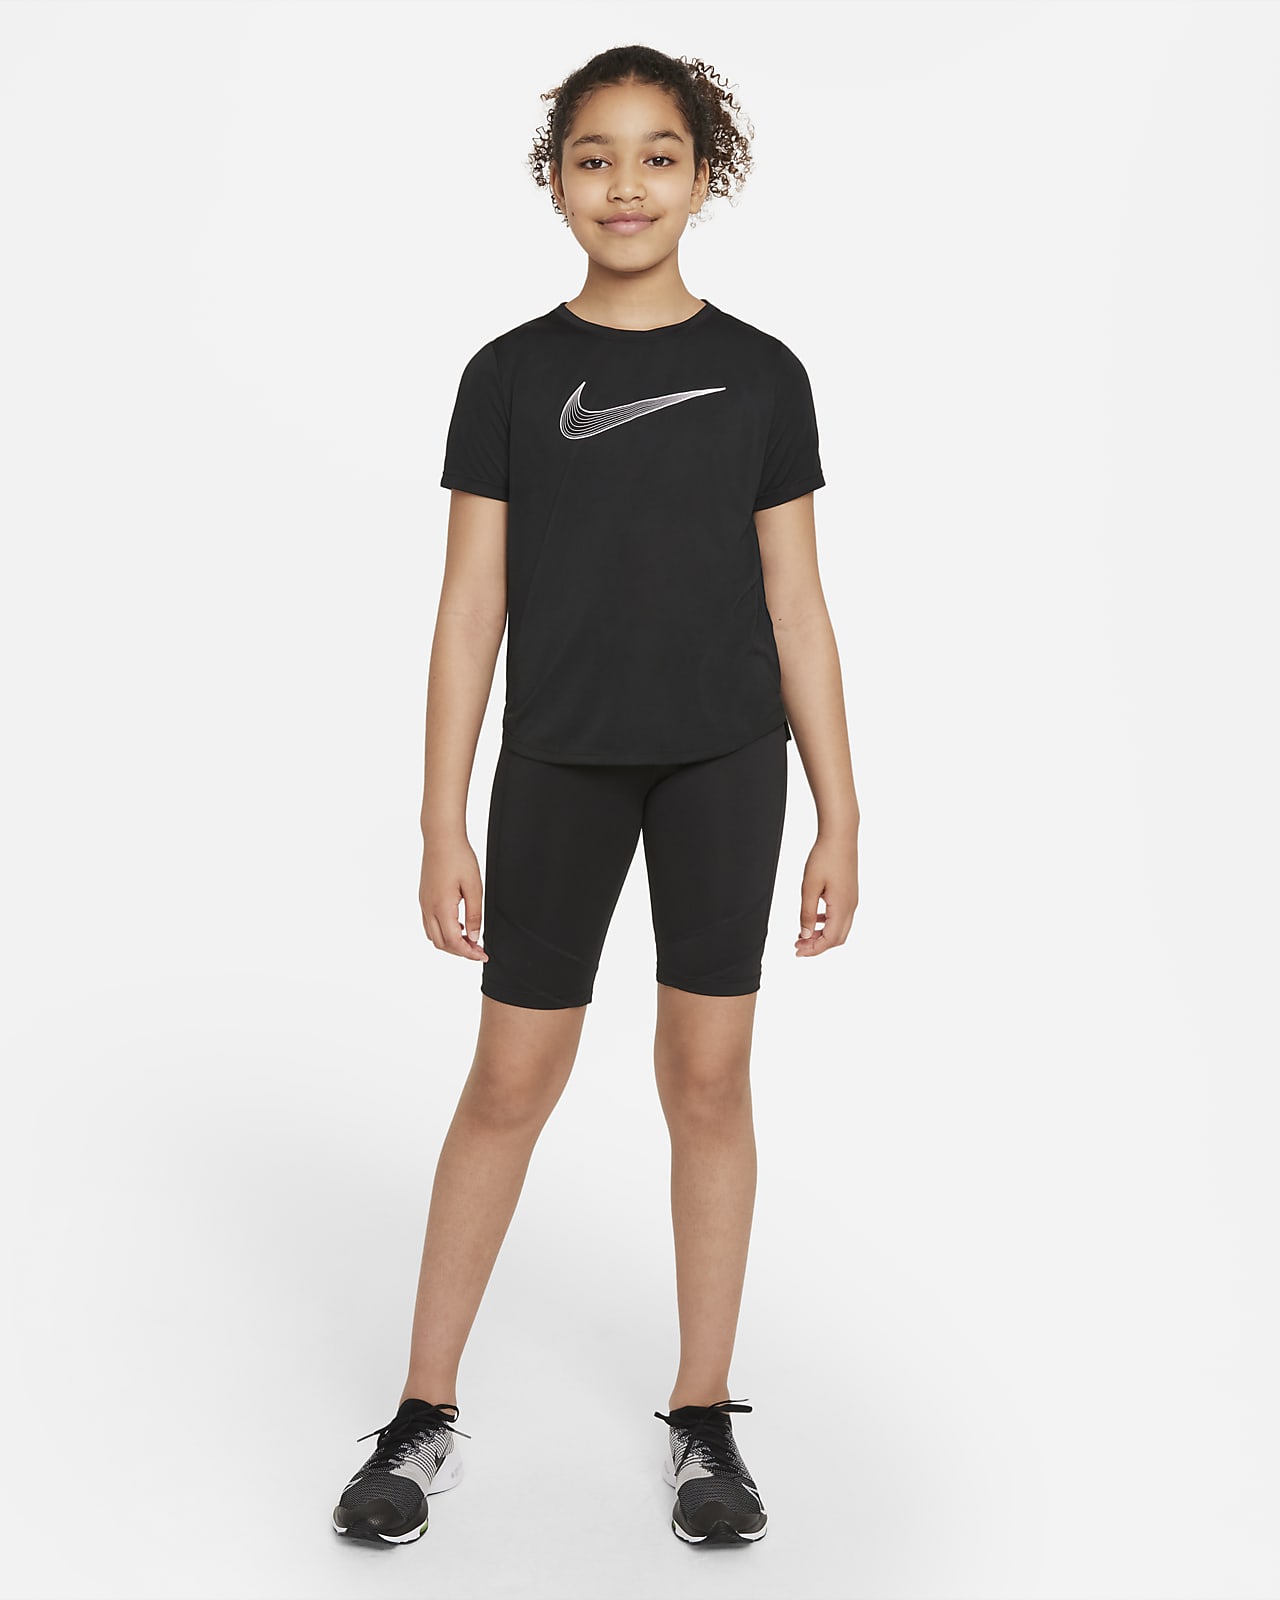 Nike One Top. (Girls\') Big Training Short-Sleeve Kids\' Dri-FIT